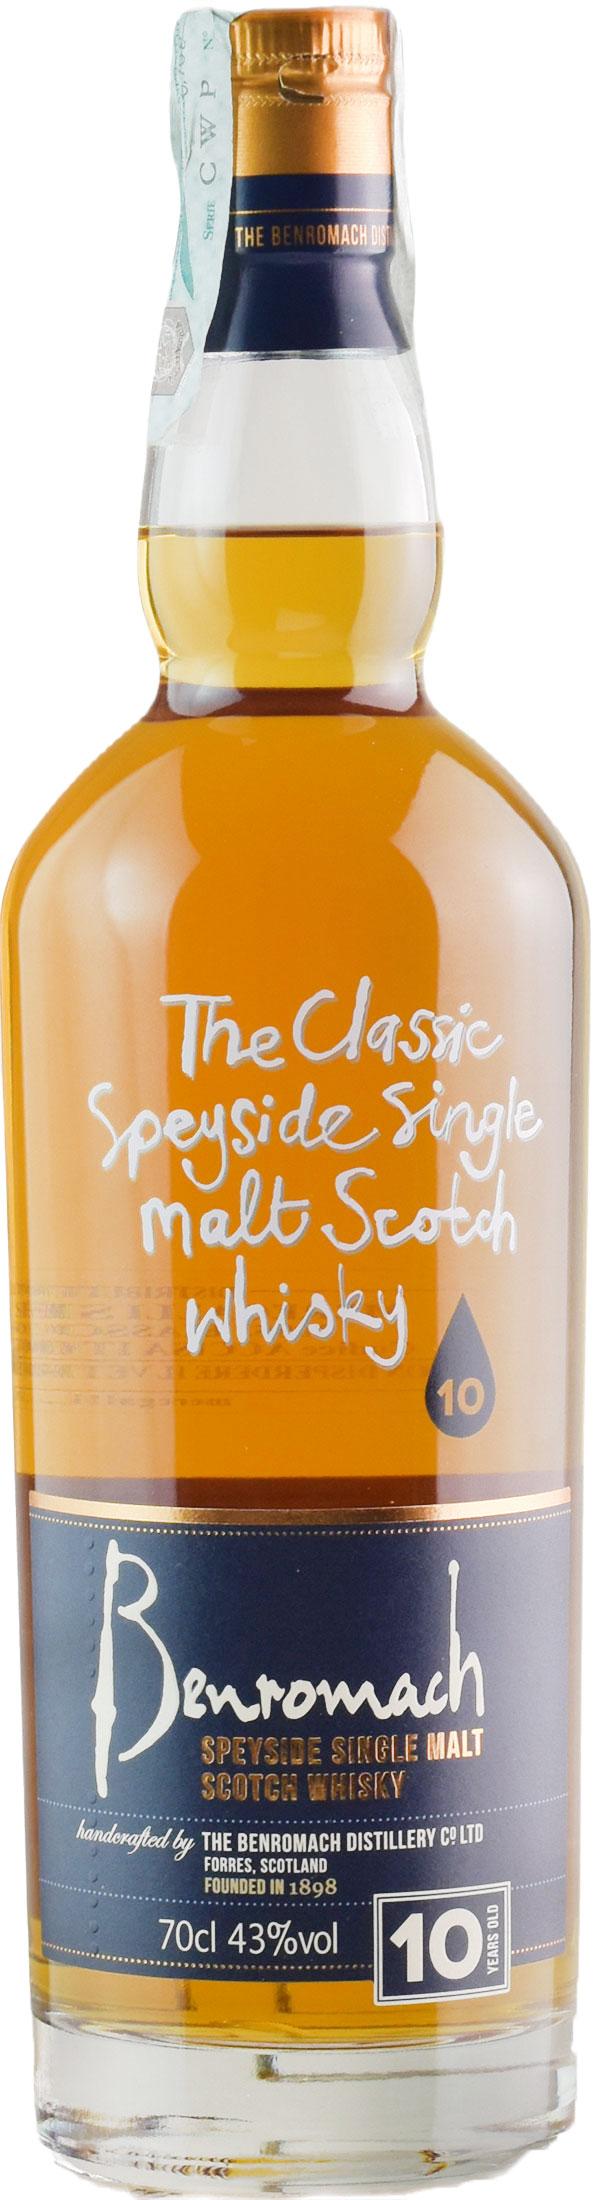 Benromach Speyside Single Malt Scotch Whisky 10 Anni